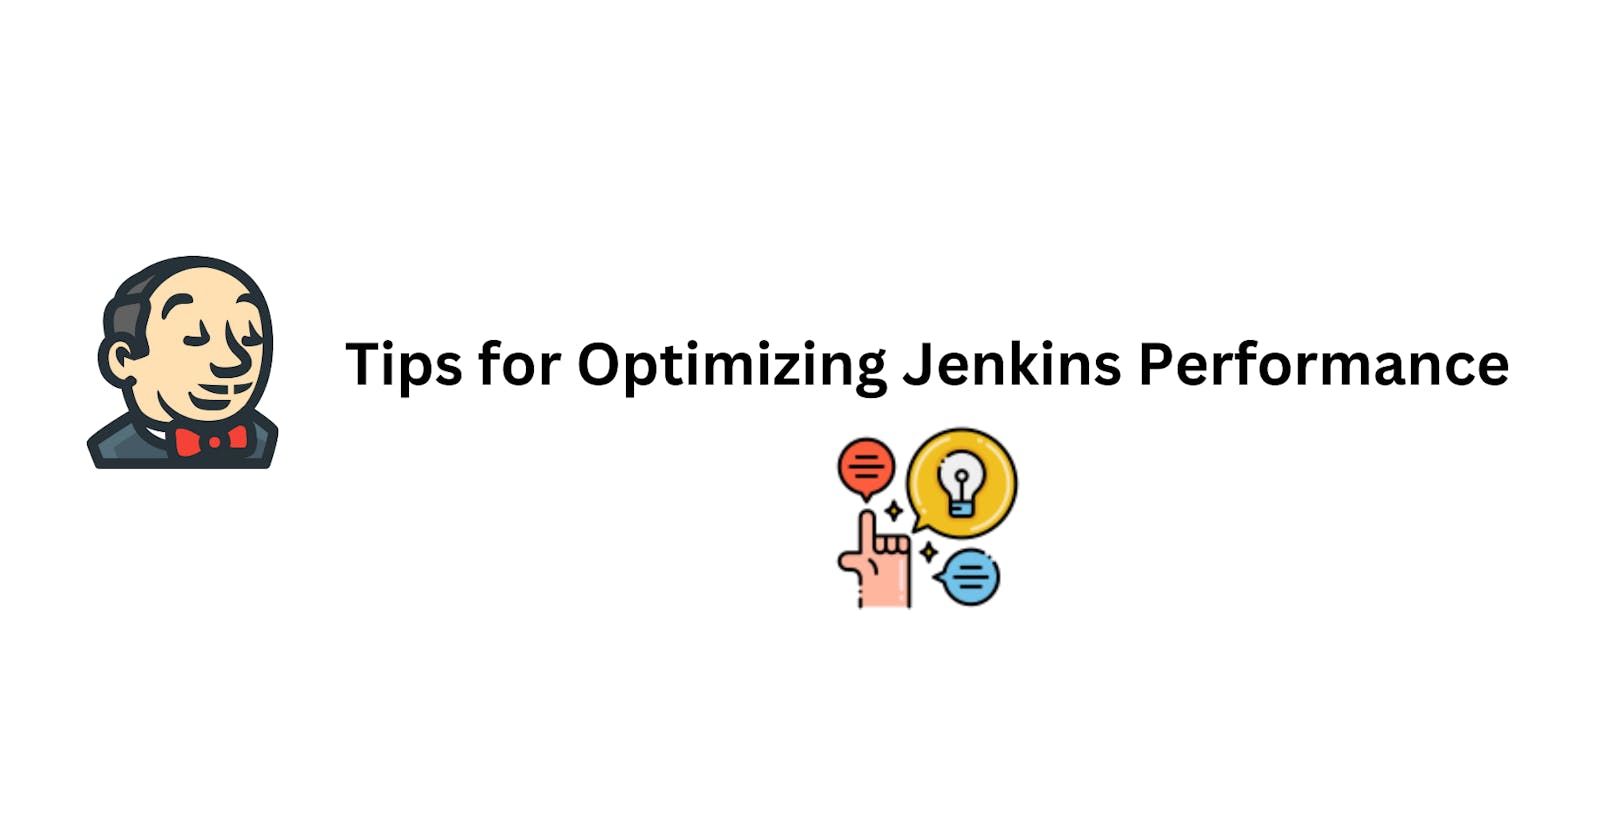 Tips for Optimizing Jenkins Performance 💡